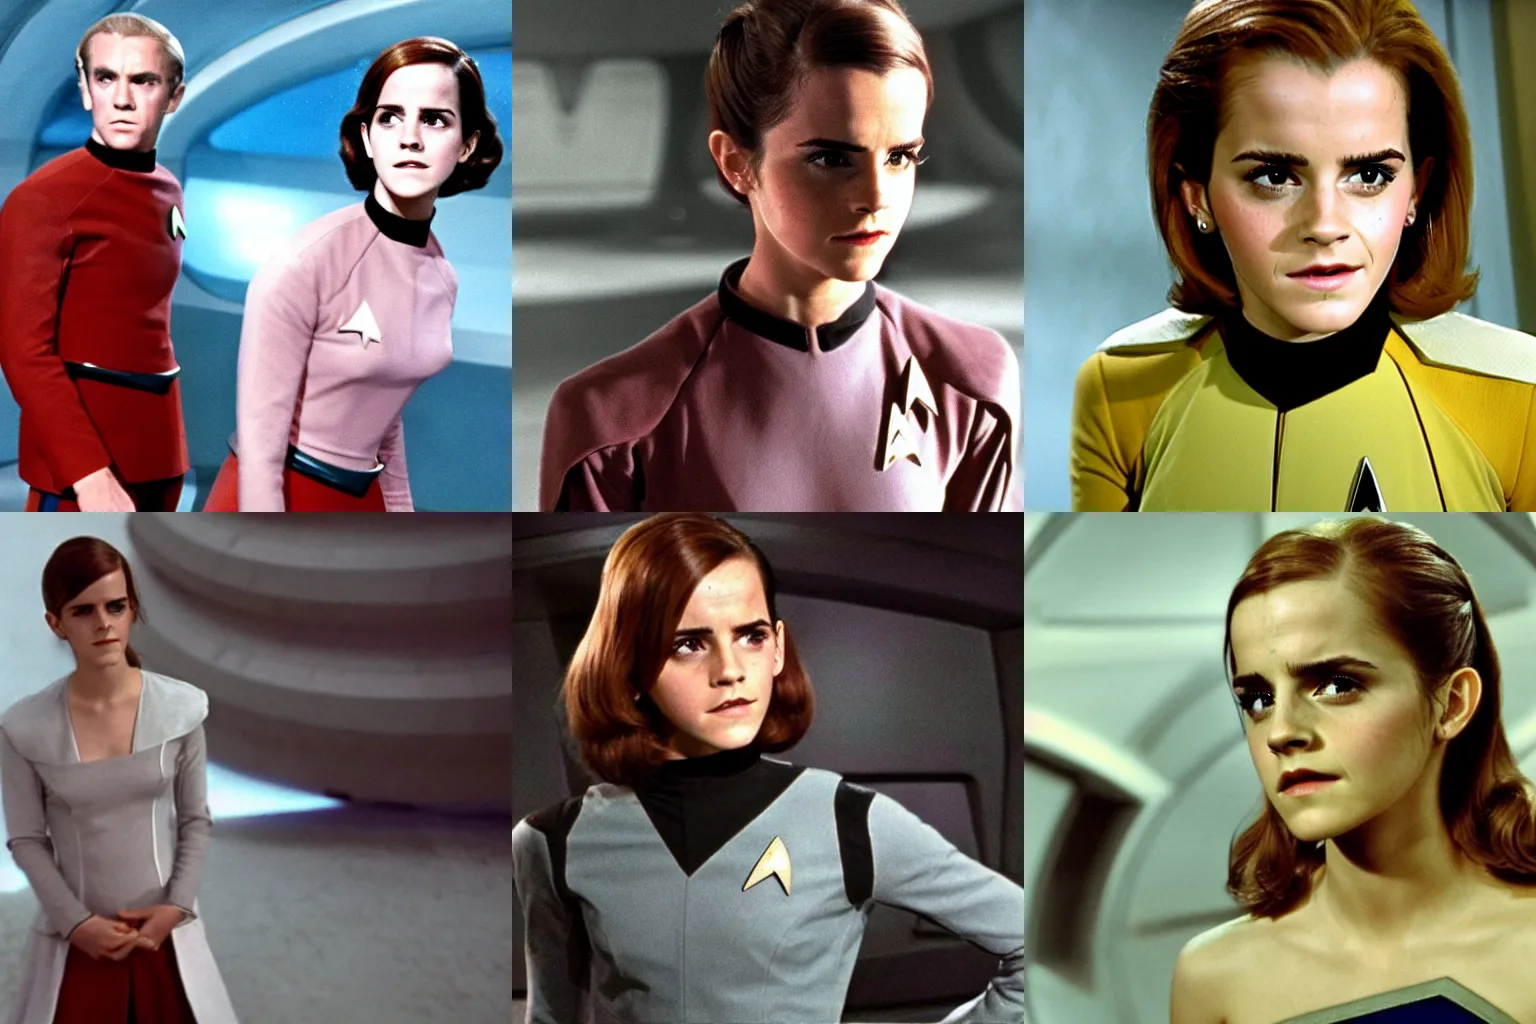 Prompt: Emma Watson starring in Star Trek the Original Series (1966)